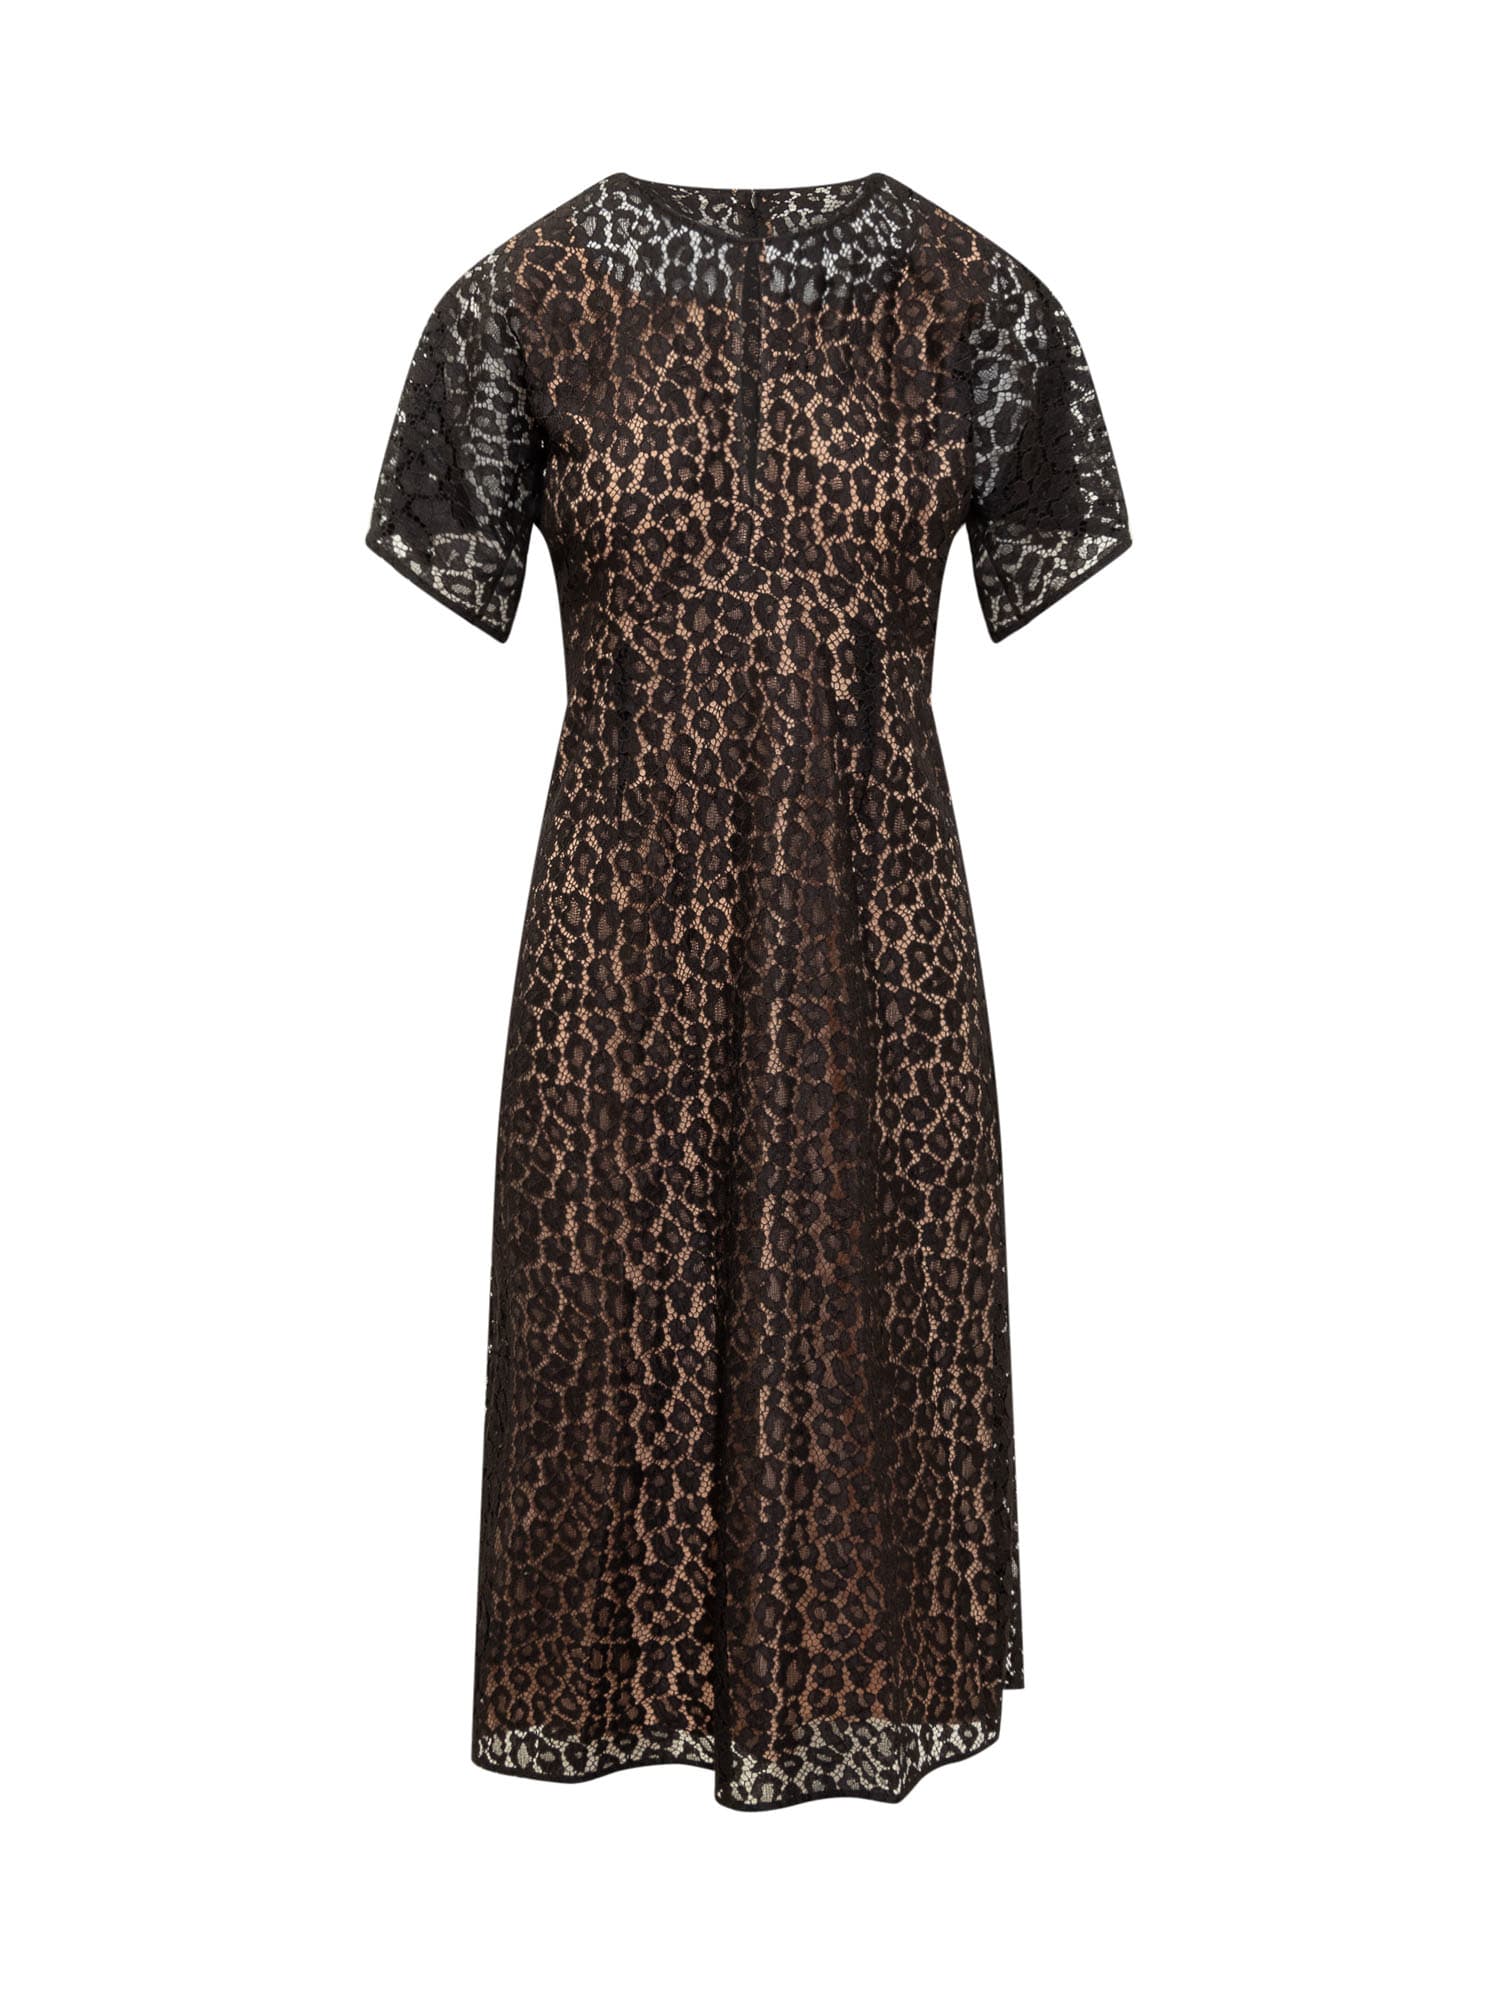 Cheetah Lace Midi Dress